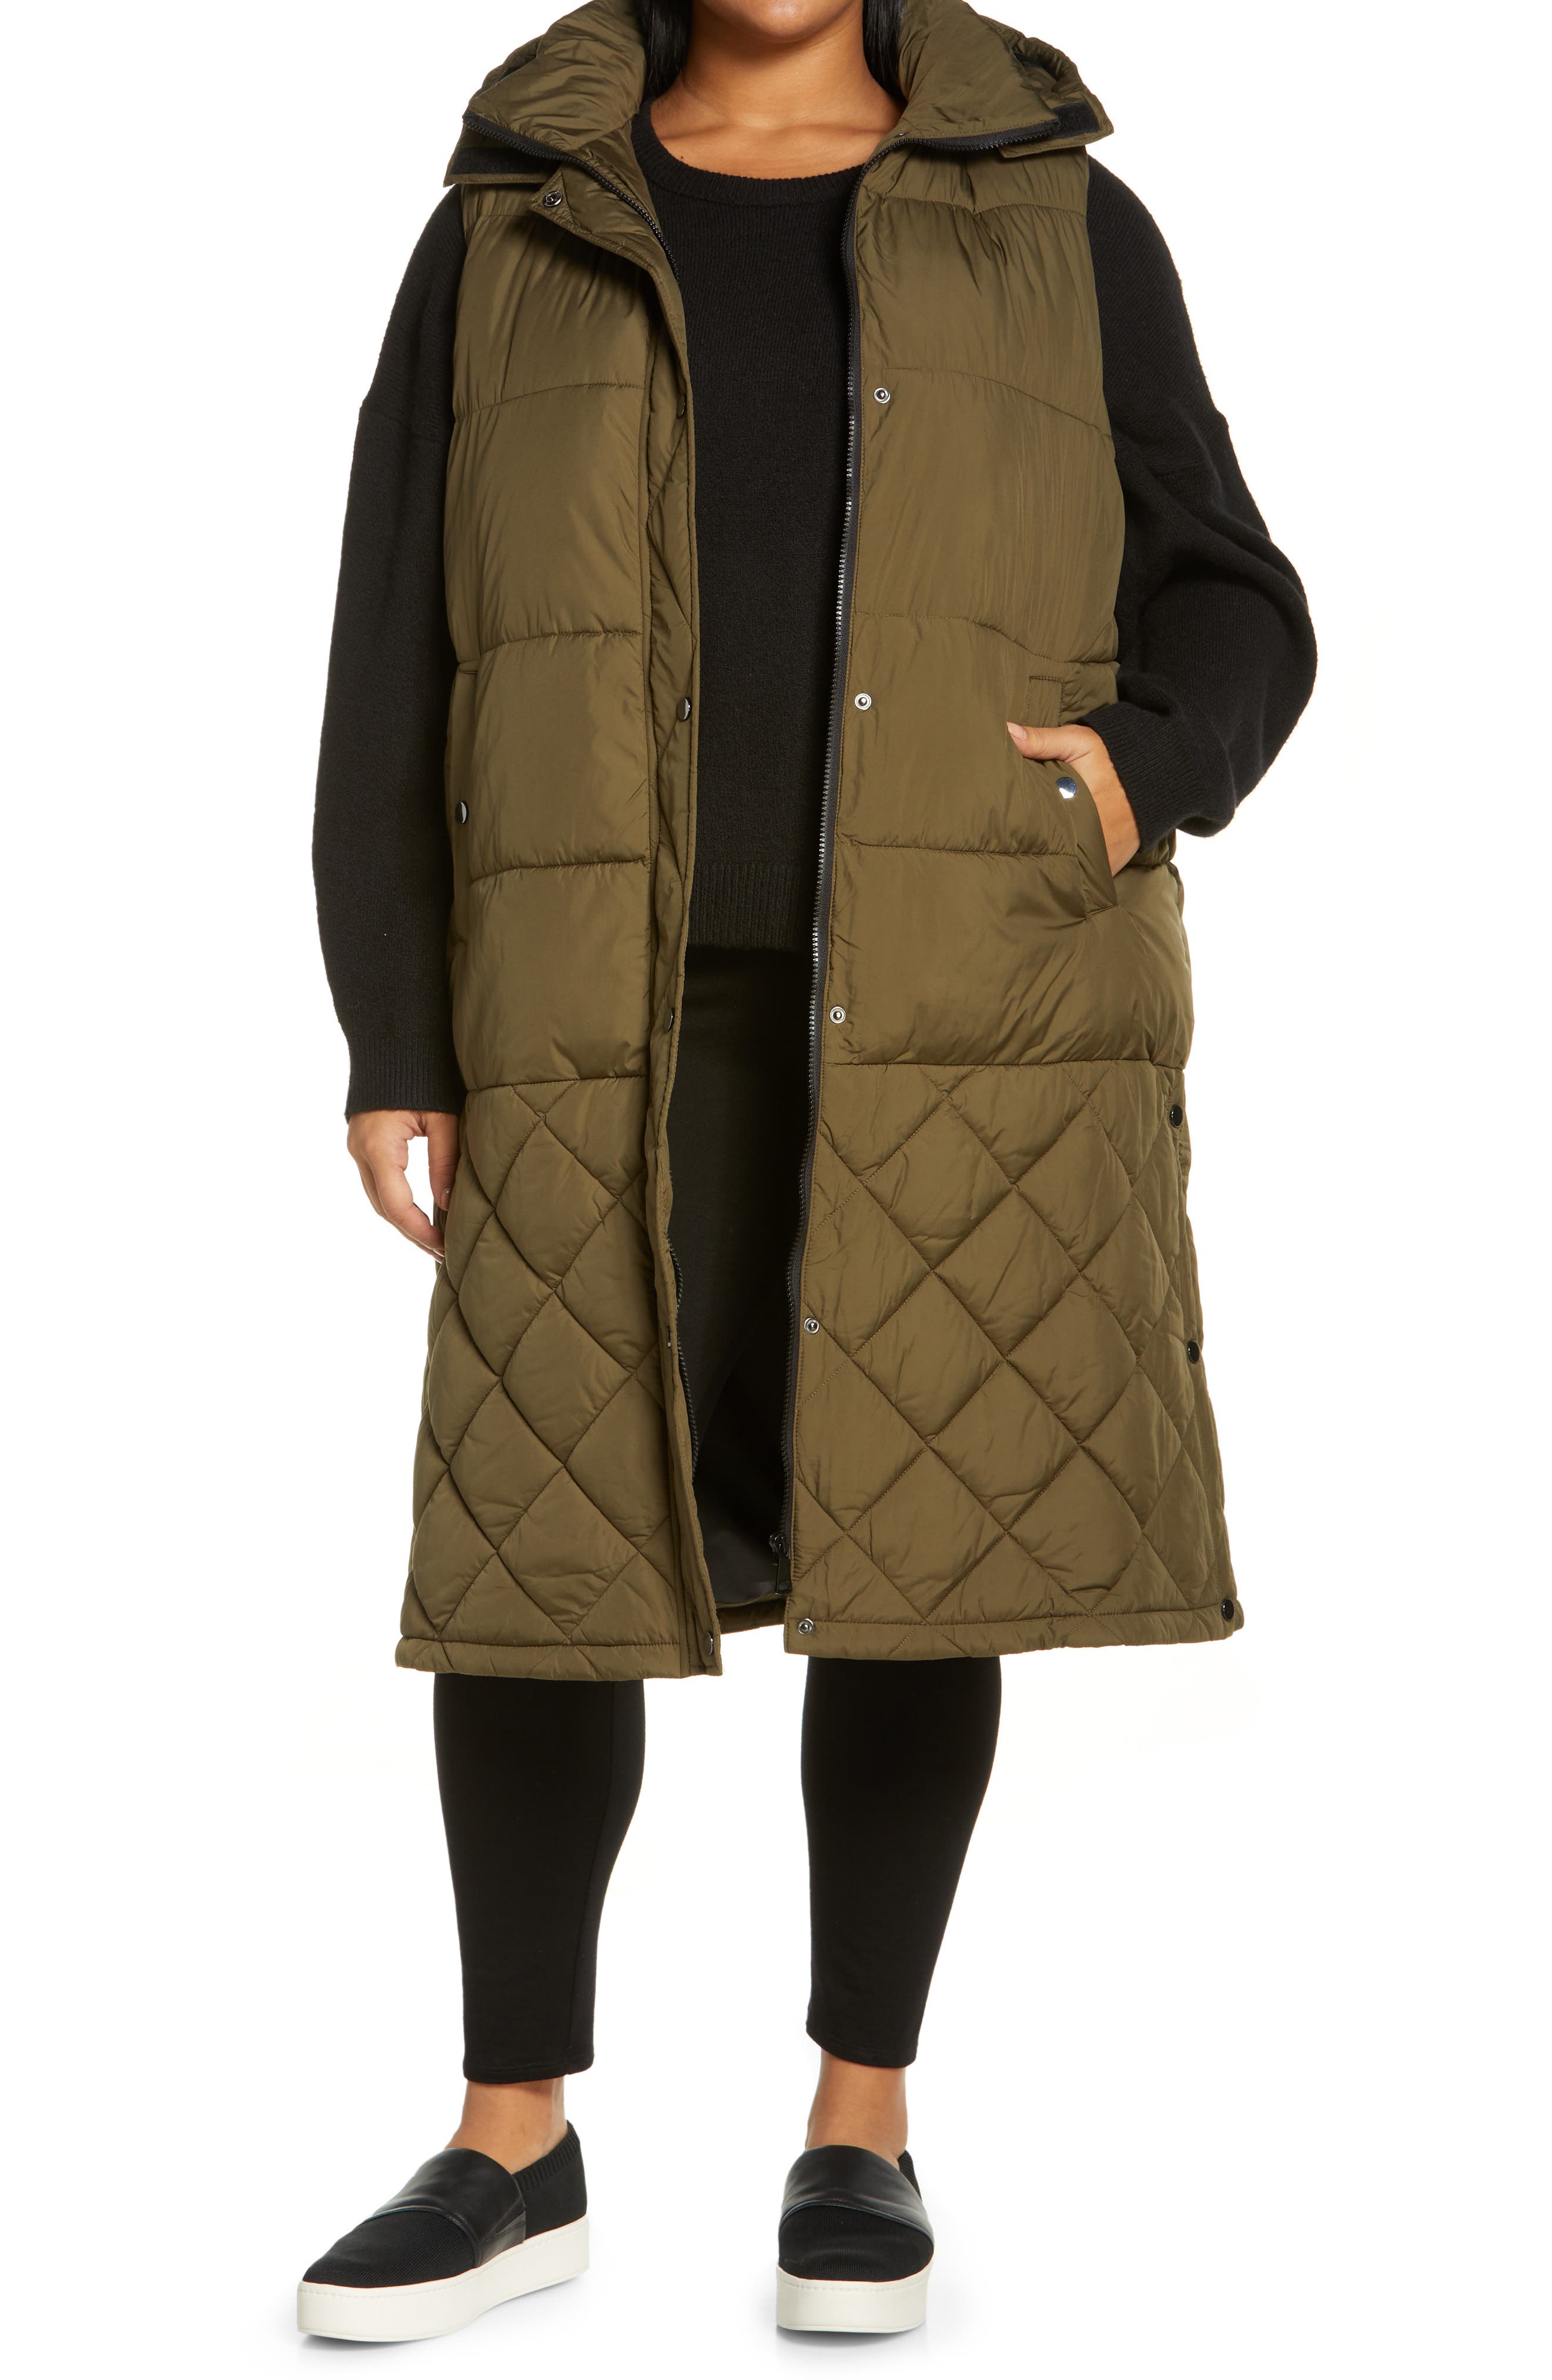 winter coats for big women